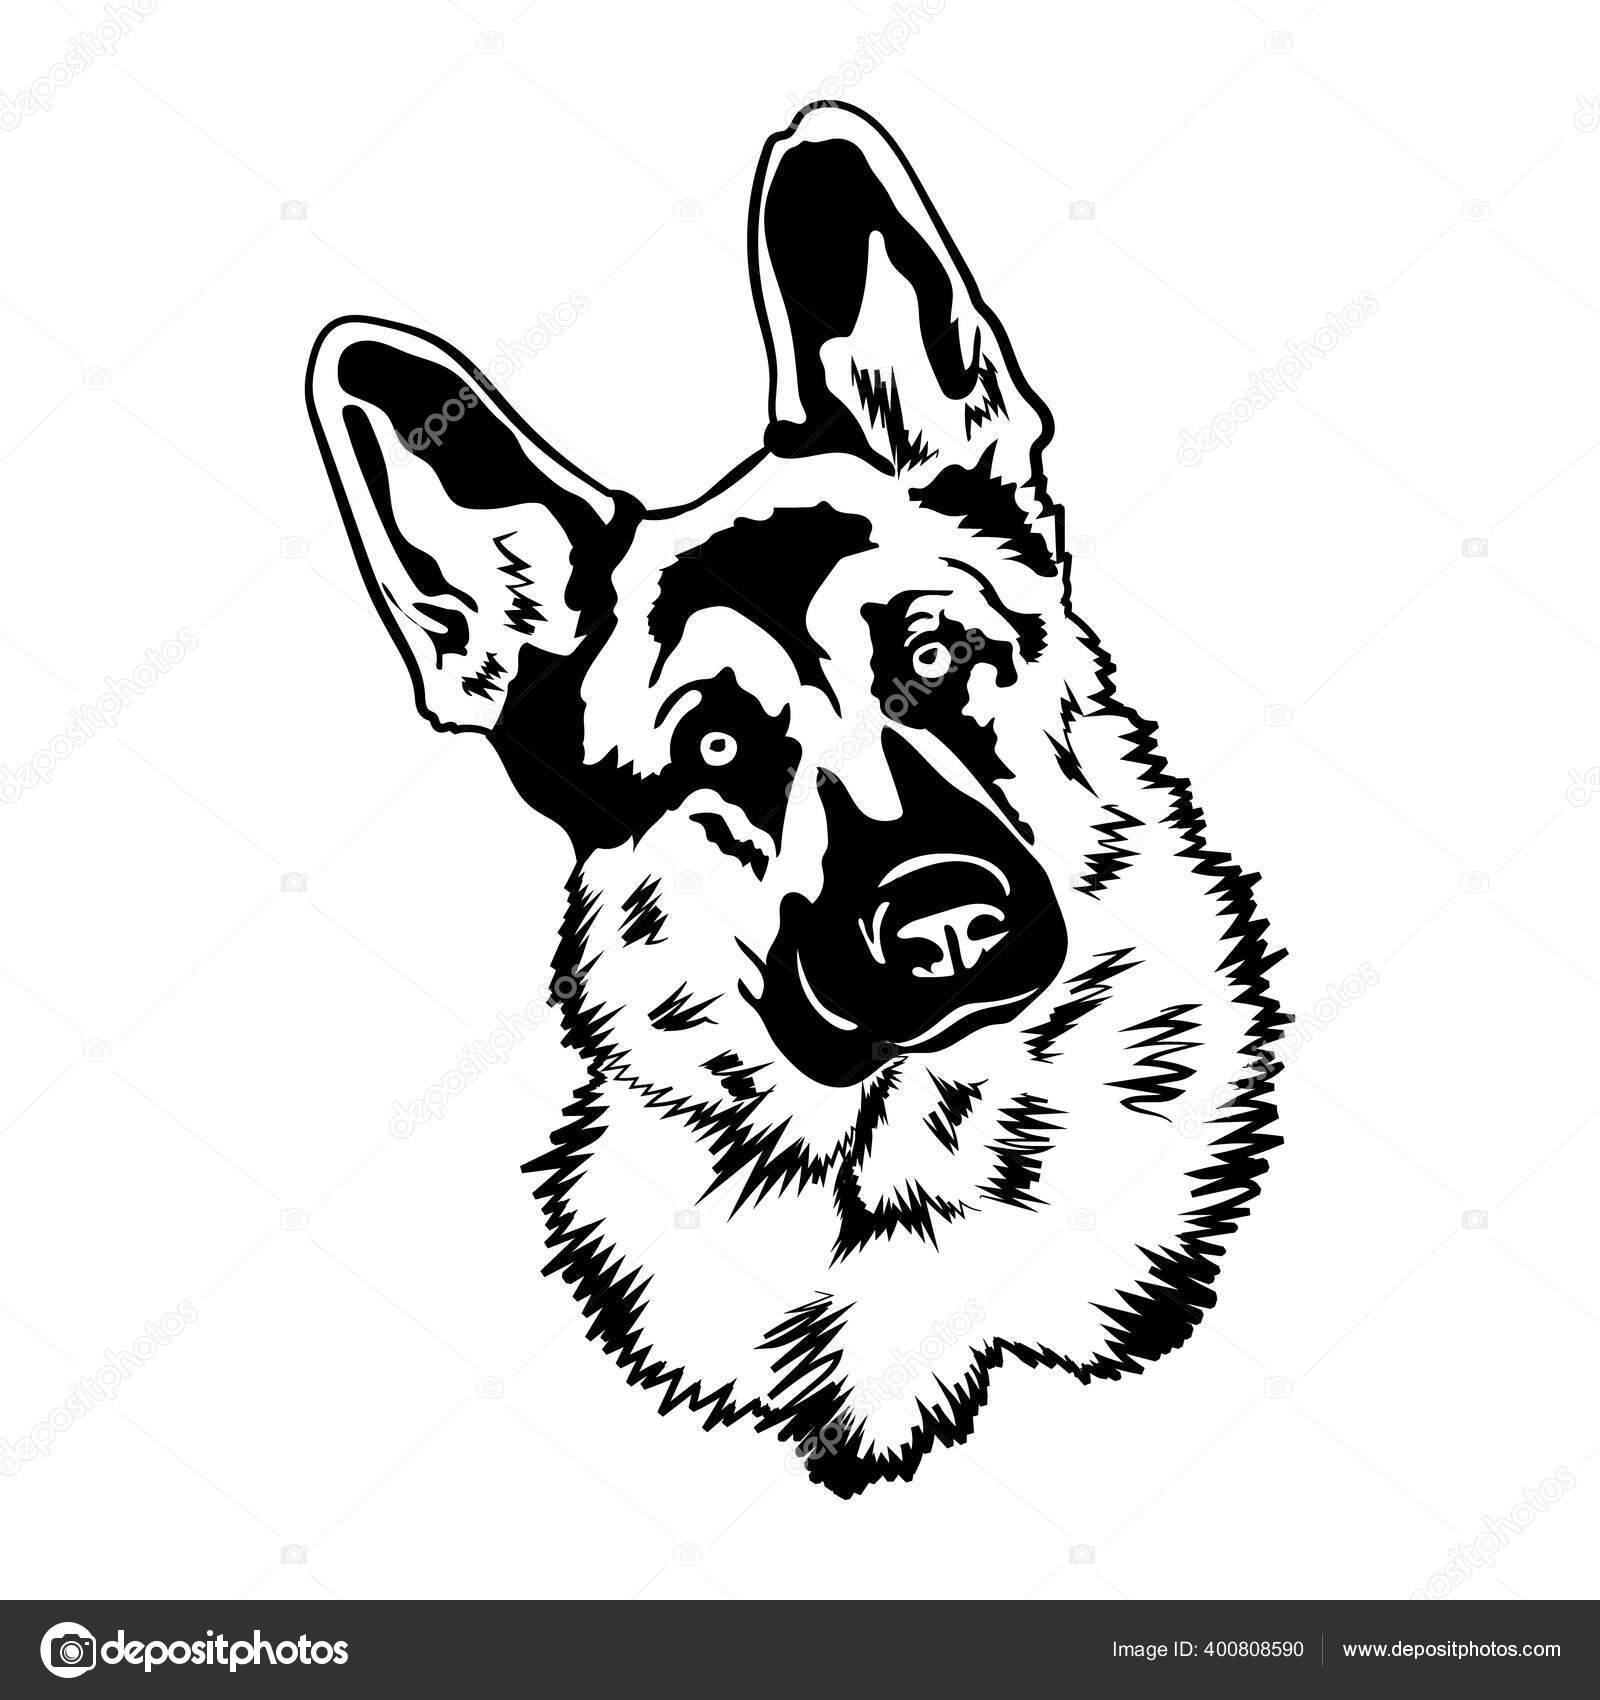 German Shepherd Svg Dog Stock Vector By © 400808590